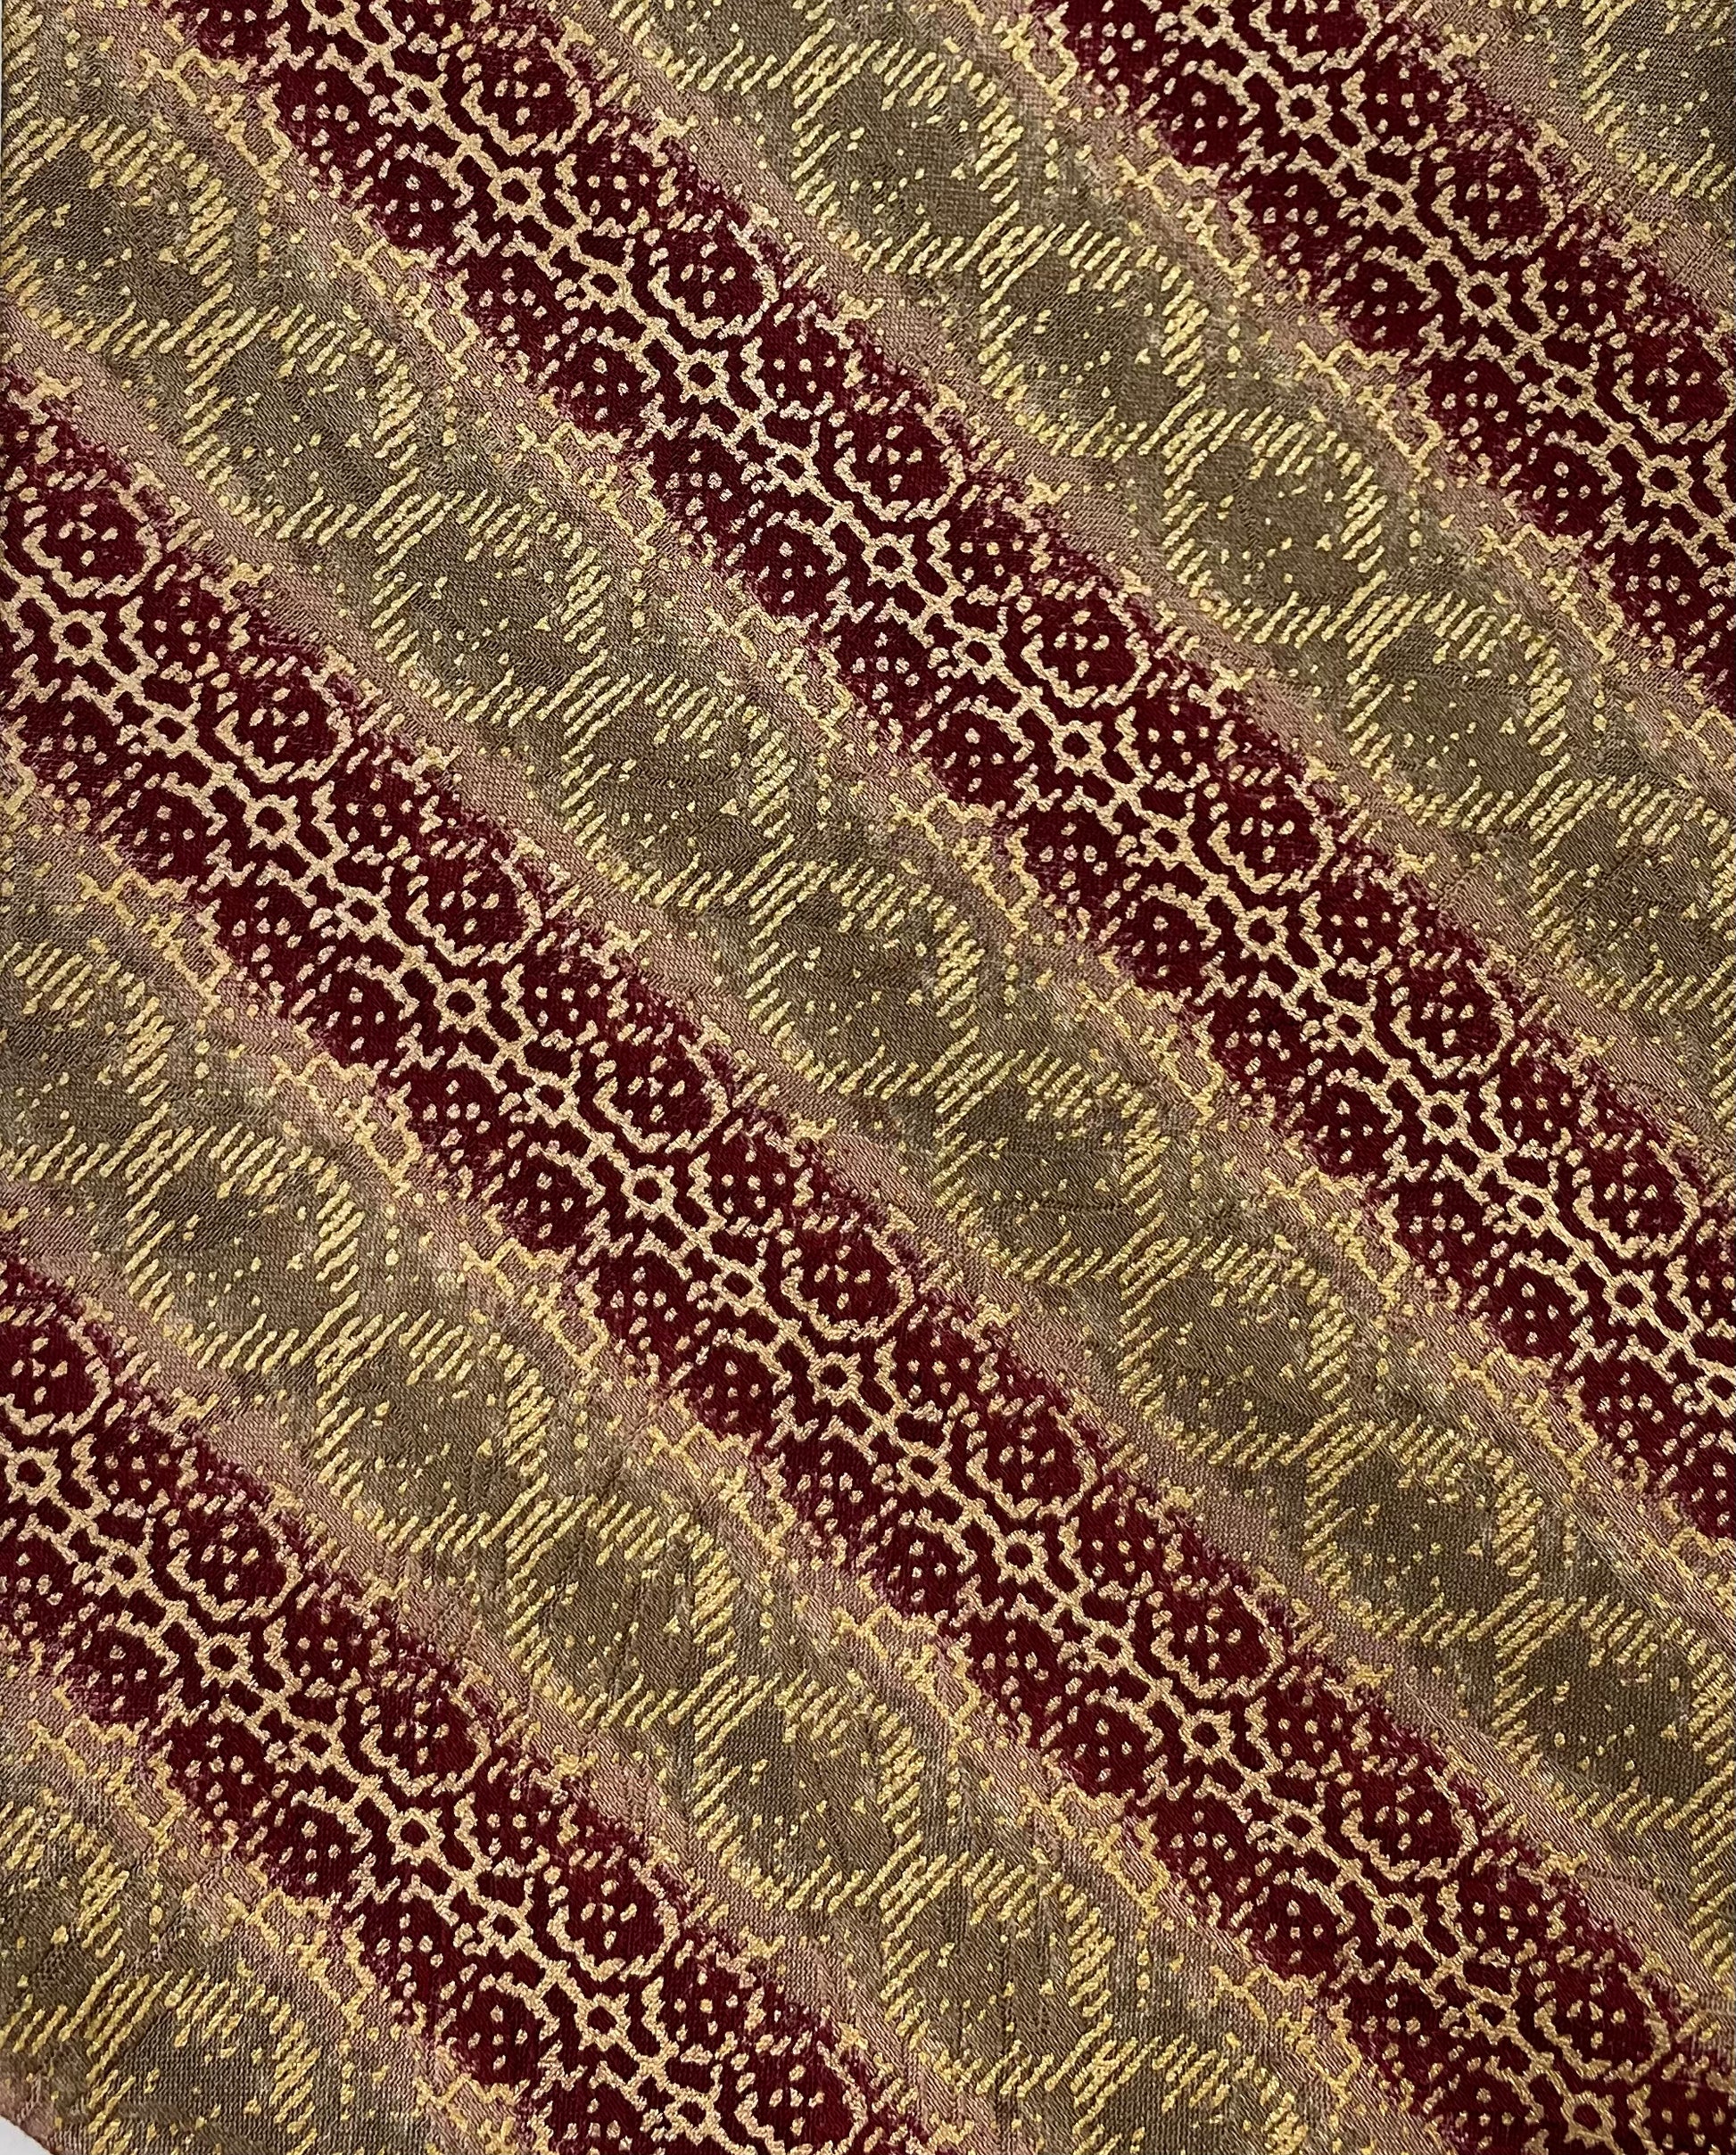 Close-up pattern detail of: 90s Deadstock Silk Necktie, Men's Vintage Gold Red Diagonal Stripe Trellis Pattern Tie, NOS